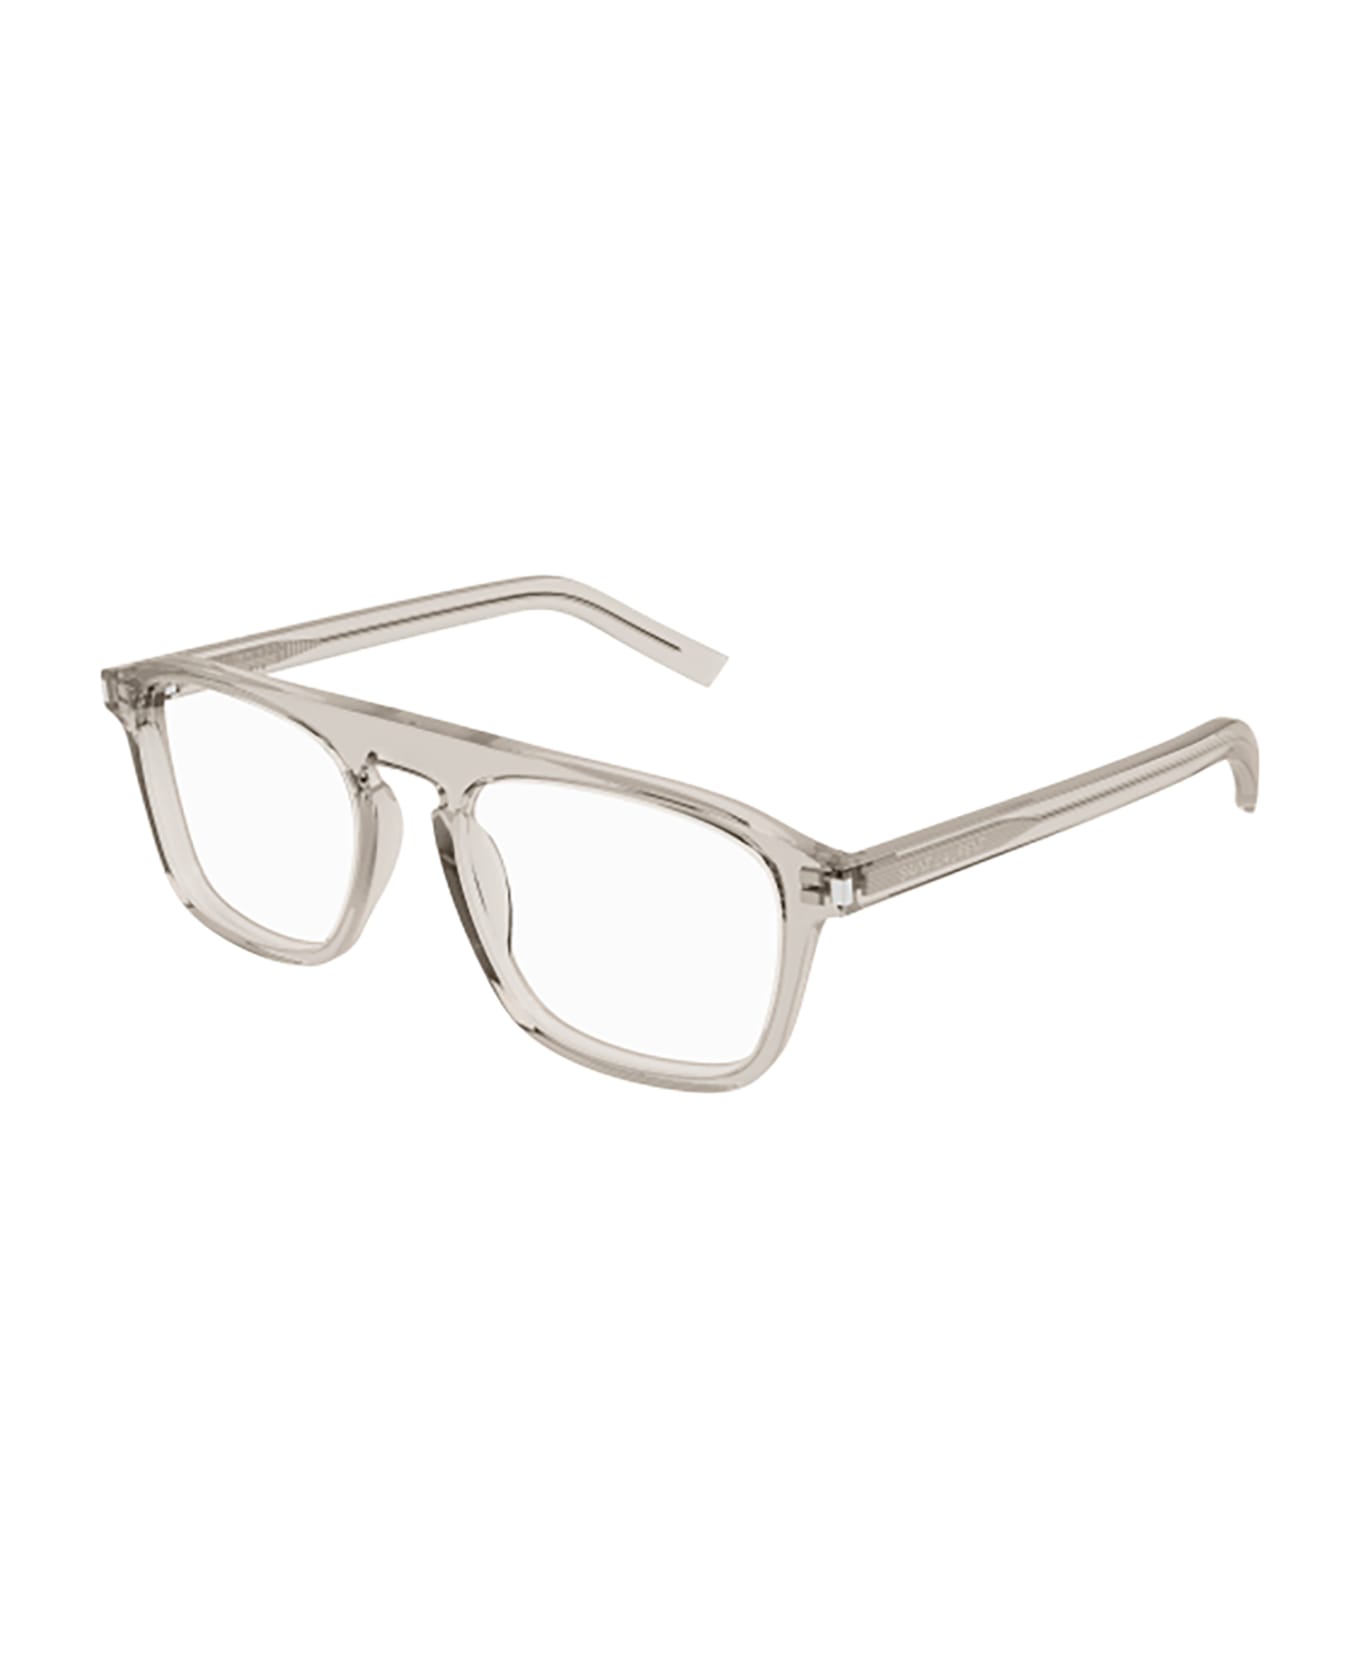 Saint Laurent Eyewear SL 157 Eyewear - Beige Beige Transpare